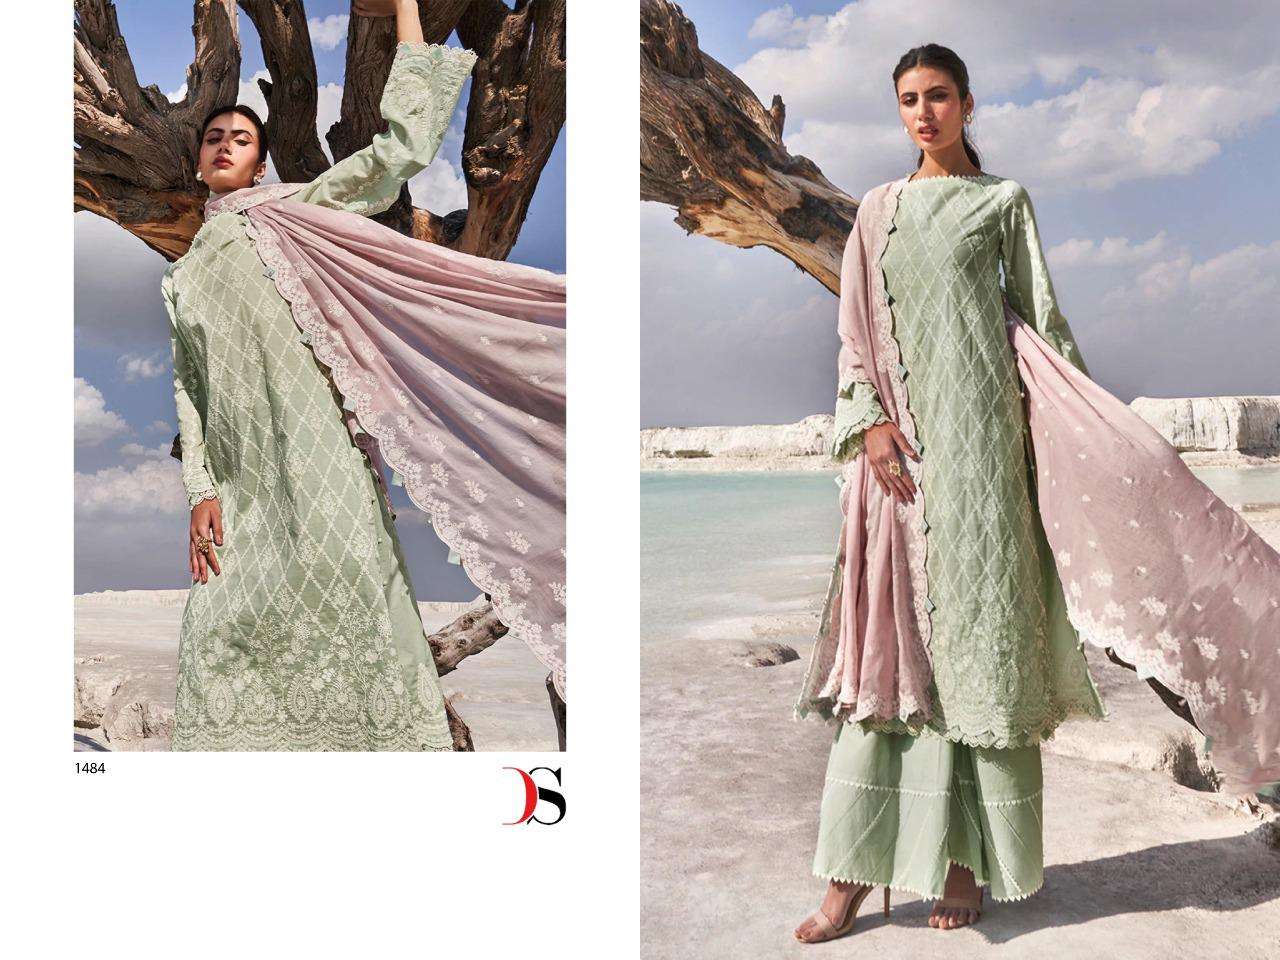 deepsy suits by lawnkari vol 22 designer chiffon dupatta salwar kameez wholesaler surat 